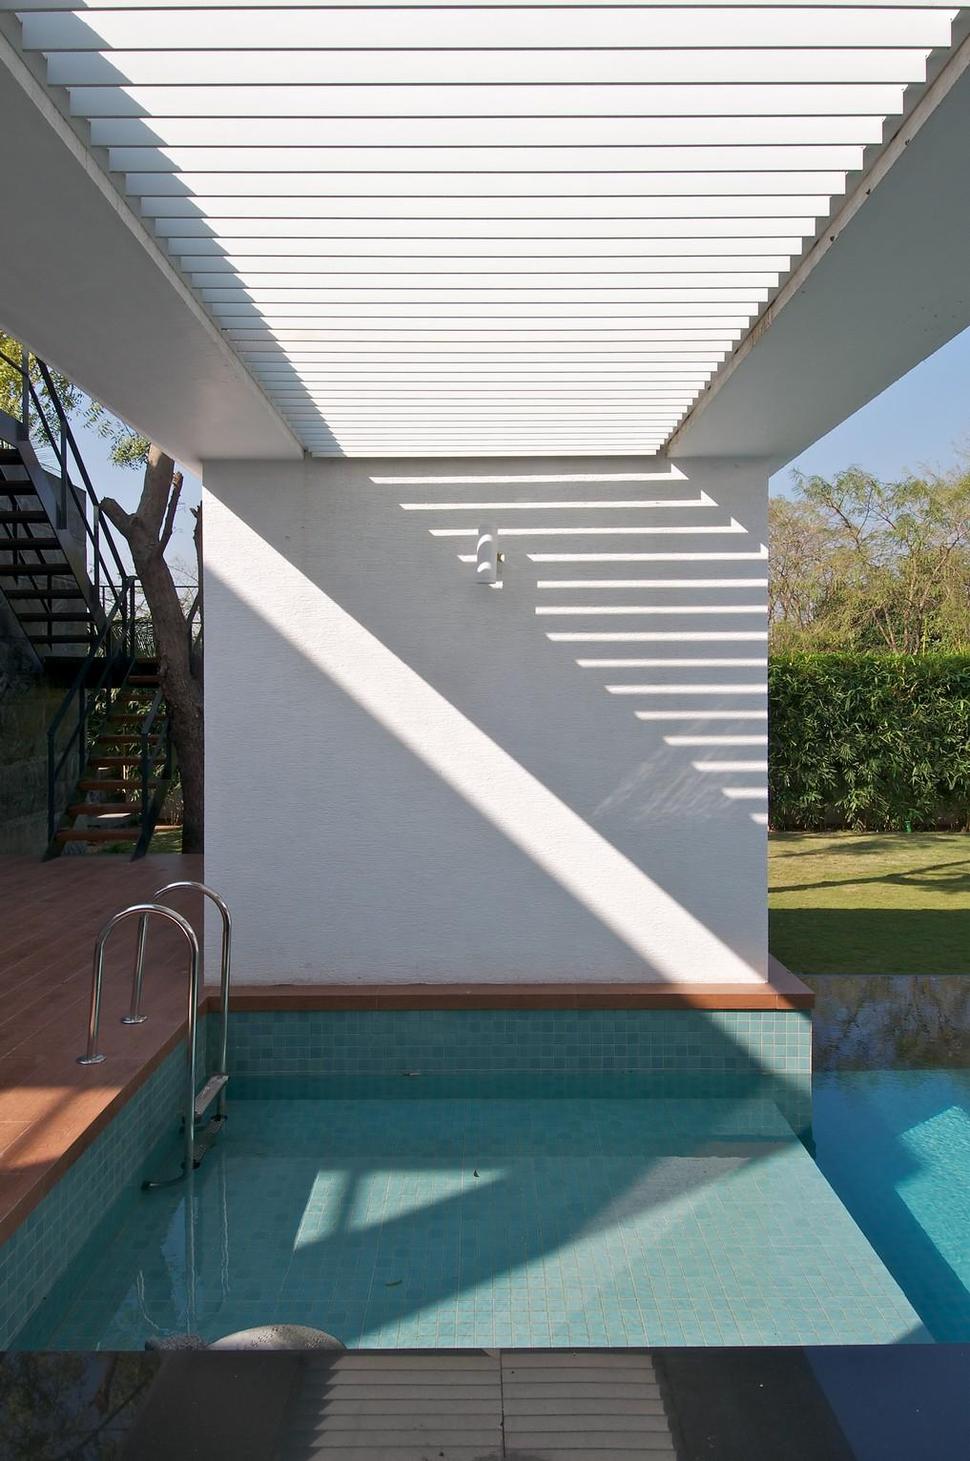 geometri-architecture-creates-artistic-minimalist-statement-10-terrace.jpg